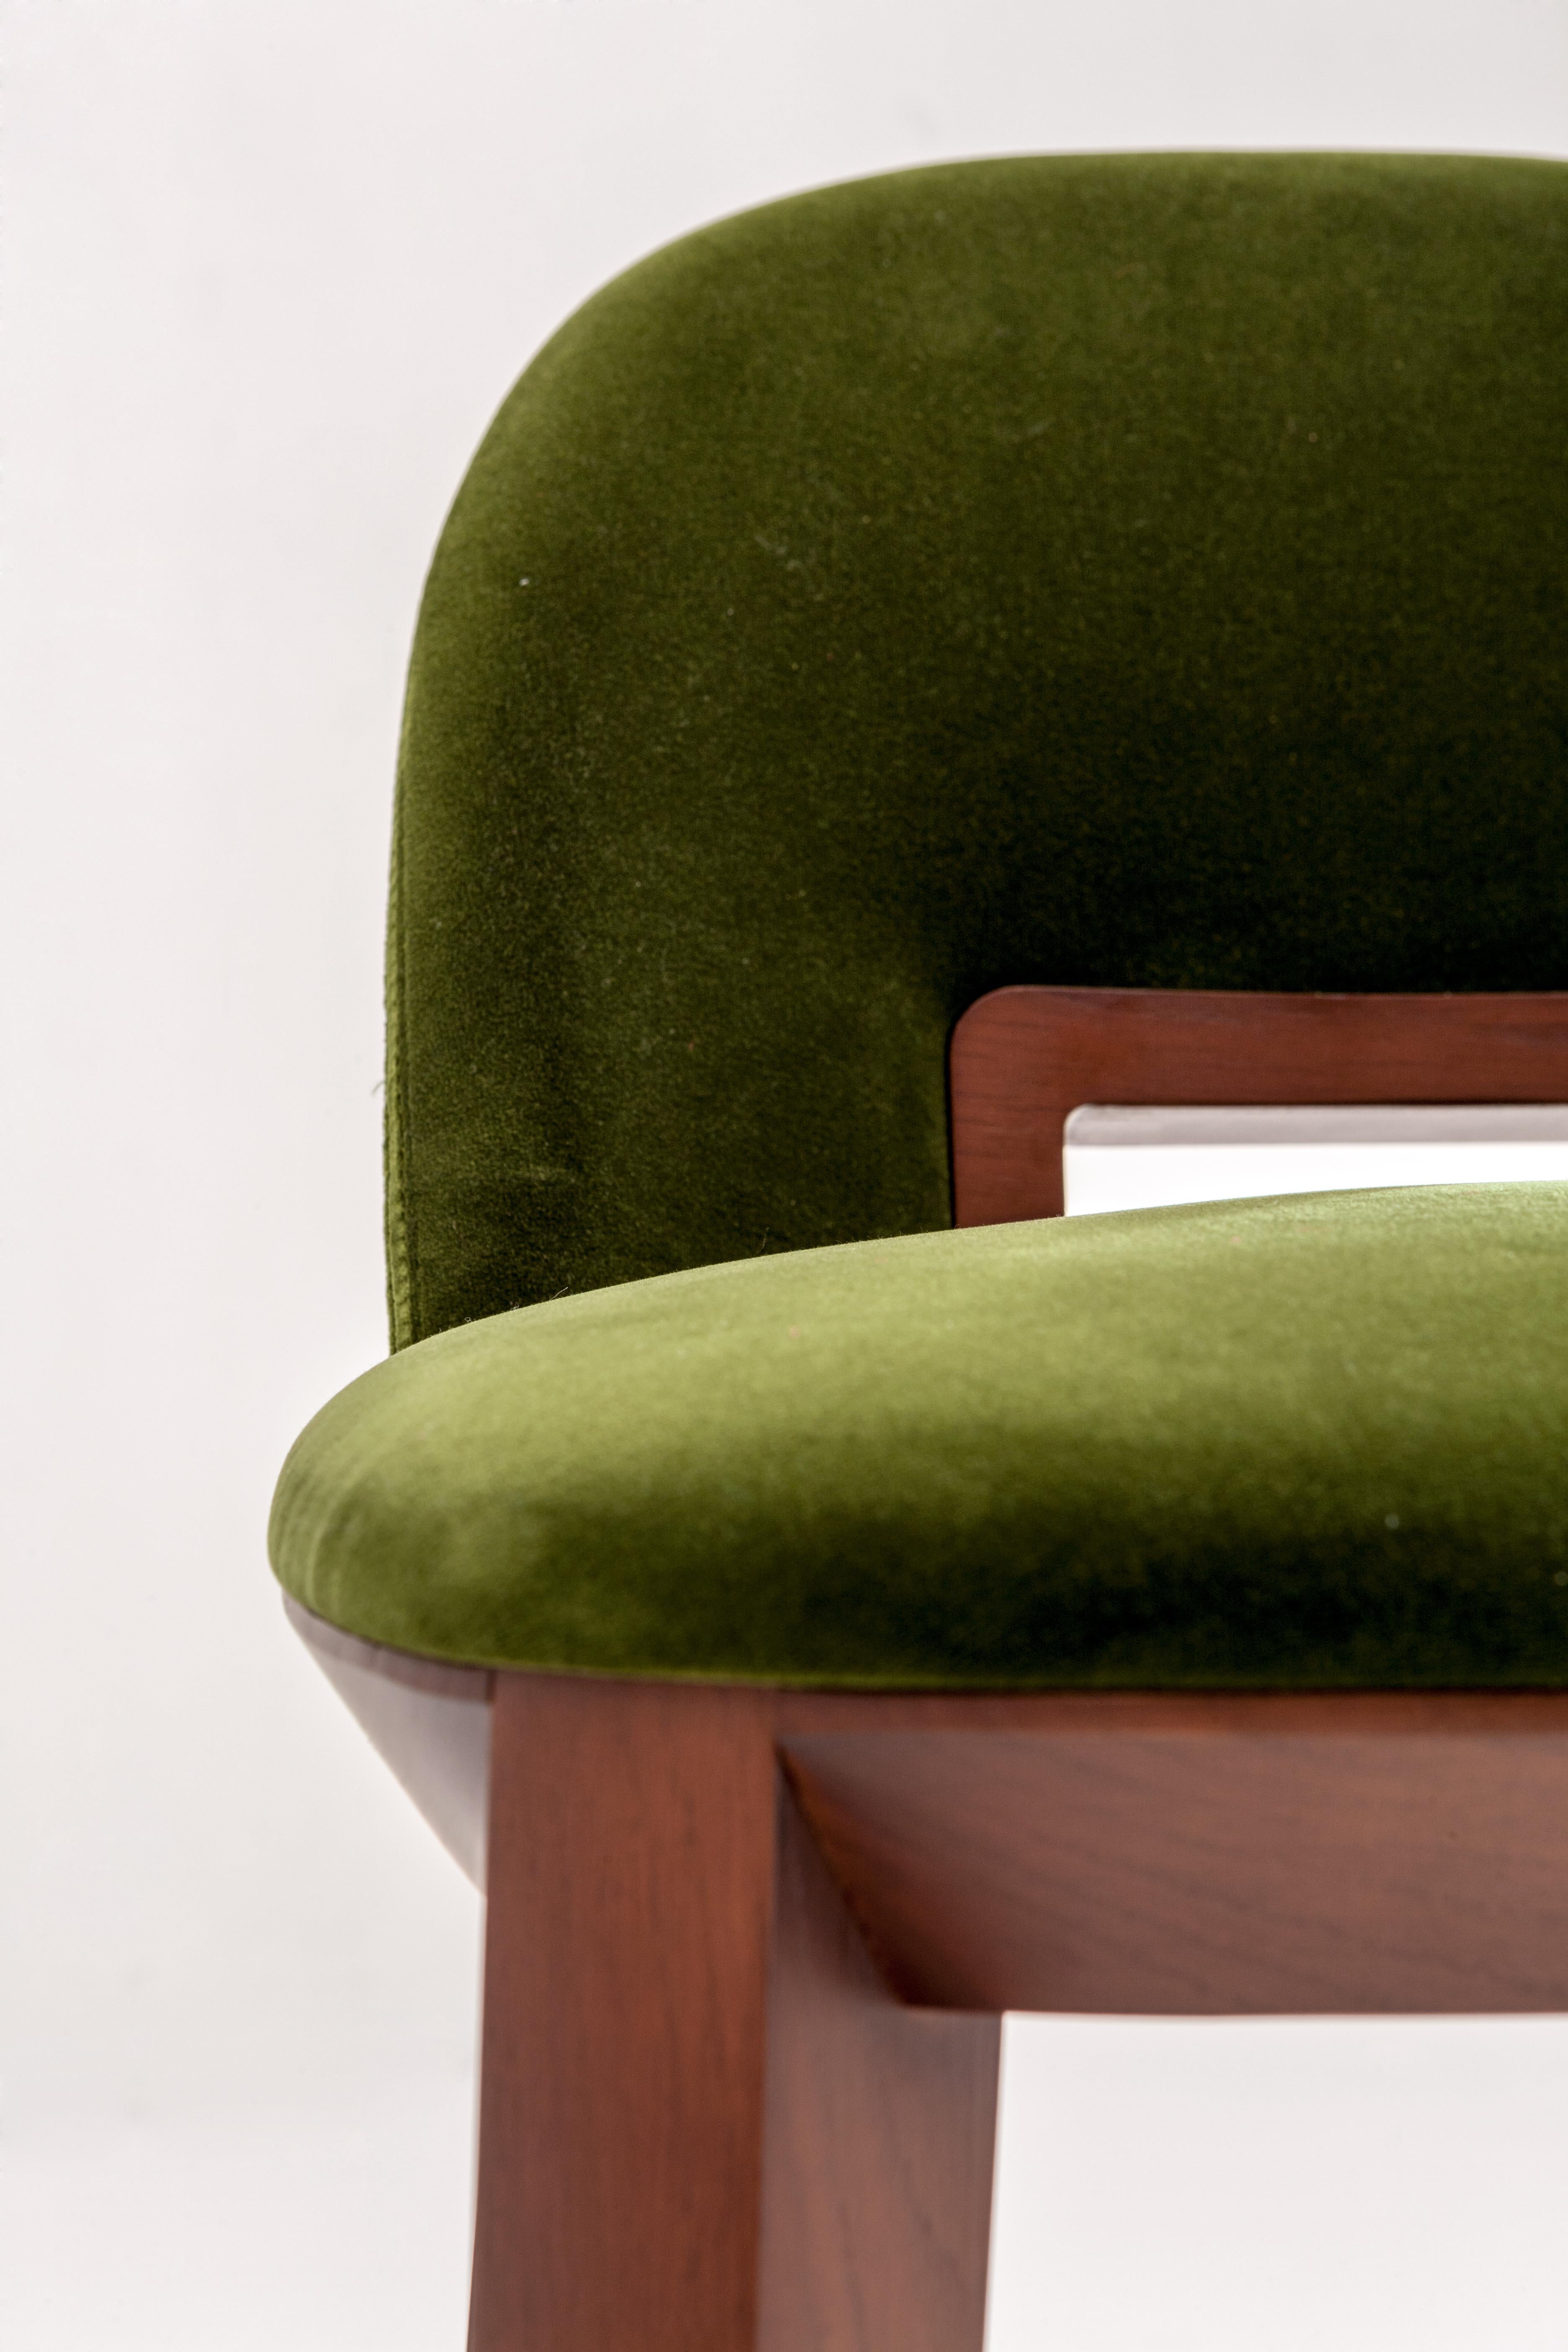 bar stools olive green